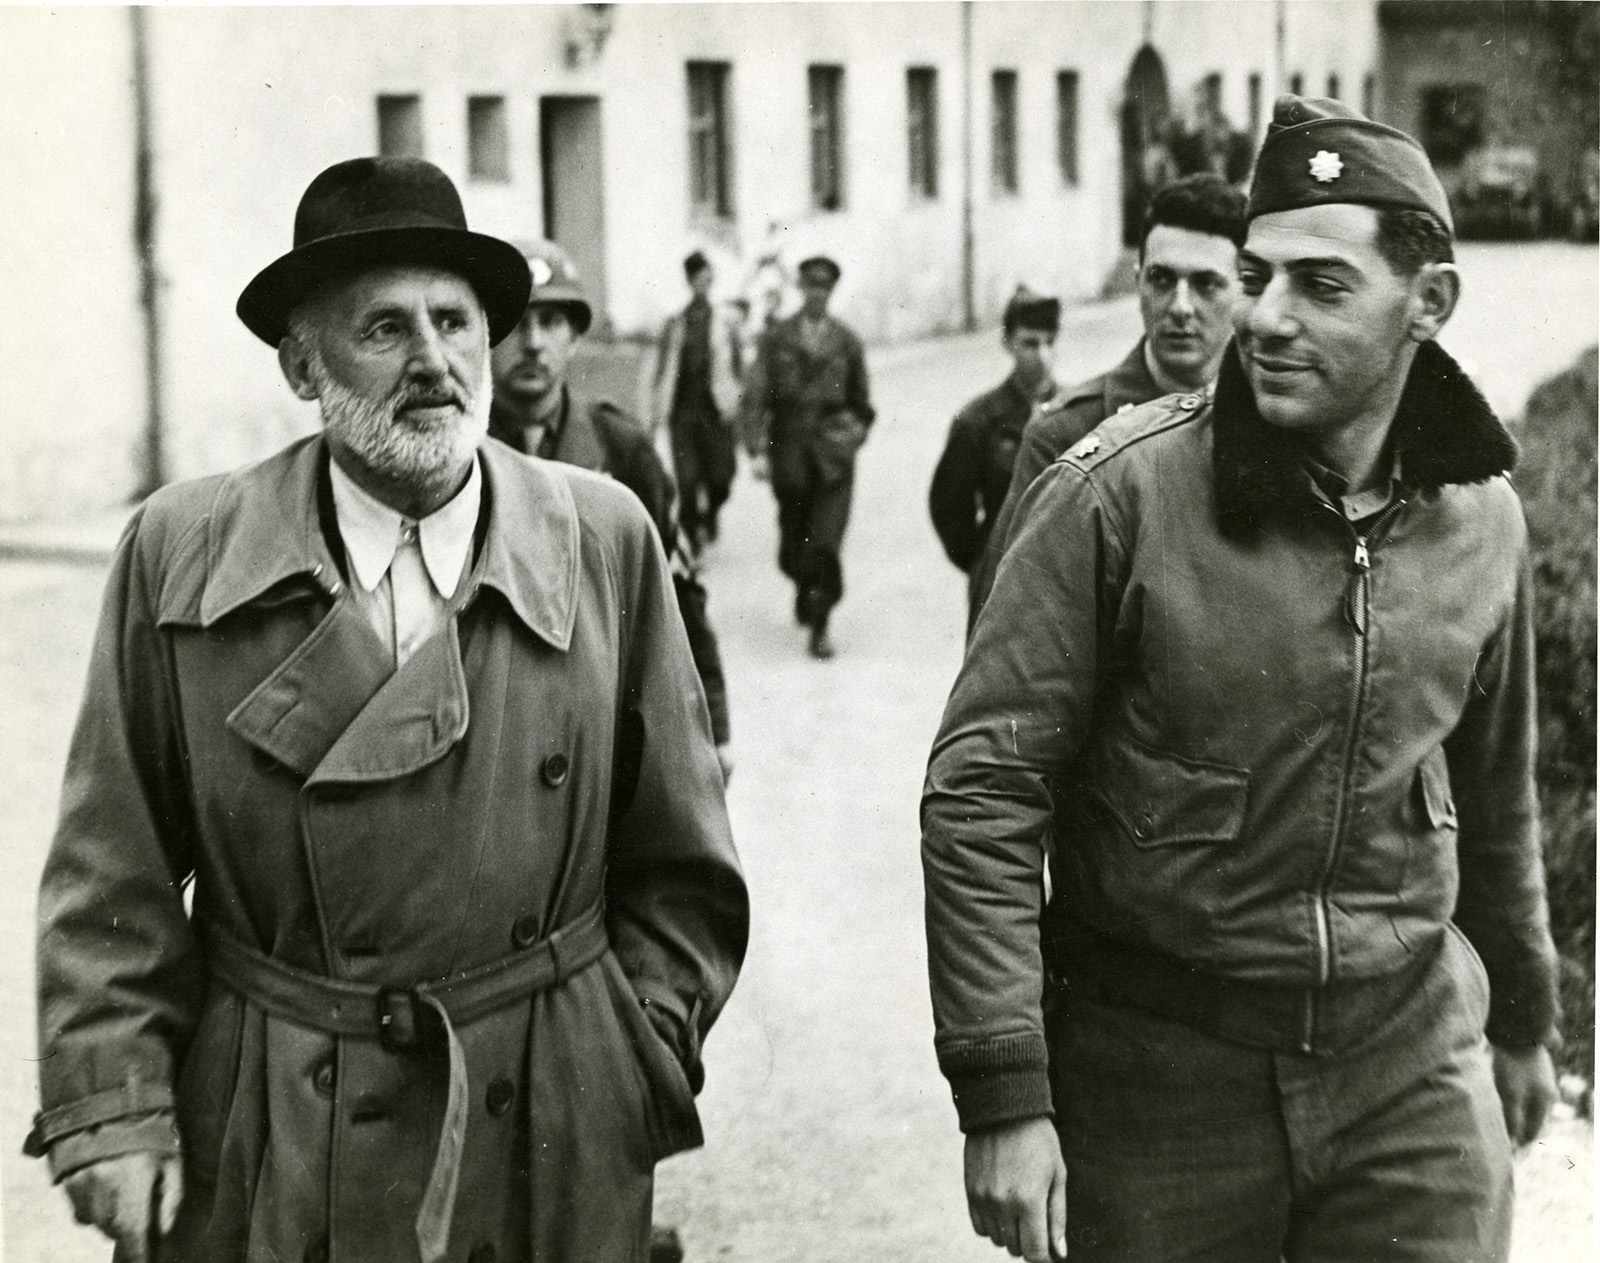 Julius Streicher, left, captured former editor of the Nazi paper 'Der Stürmer', walking with U.S. Major Henry G. Plitt in May 1945. Photo via ww2online.org